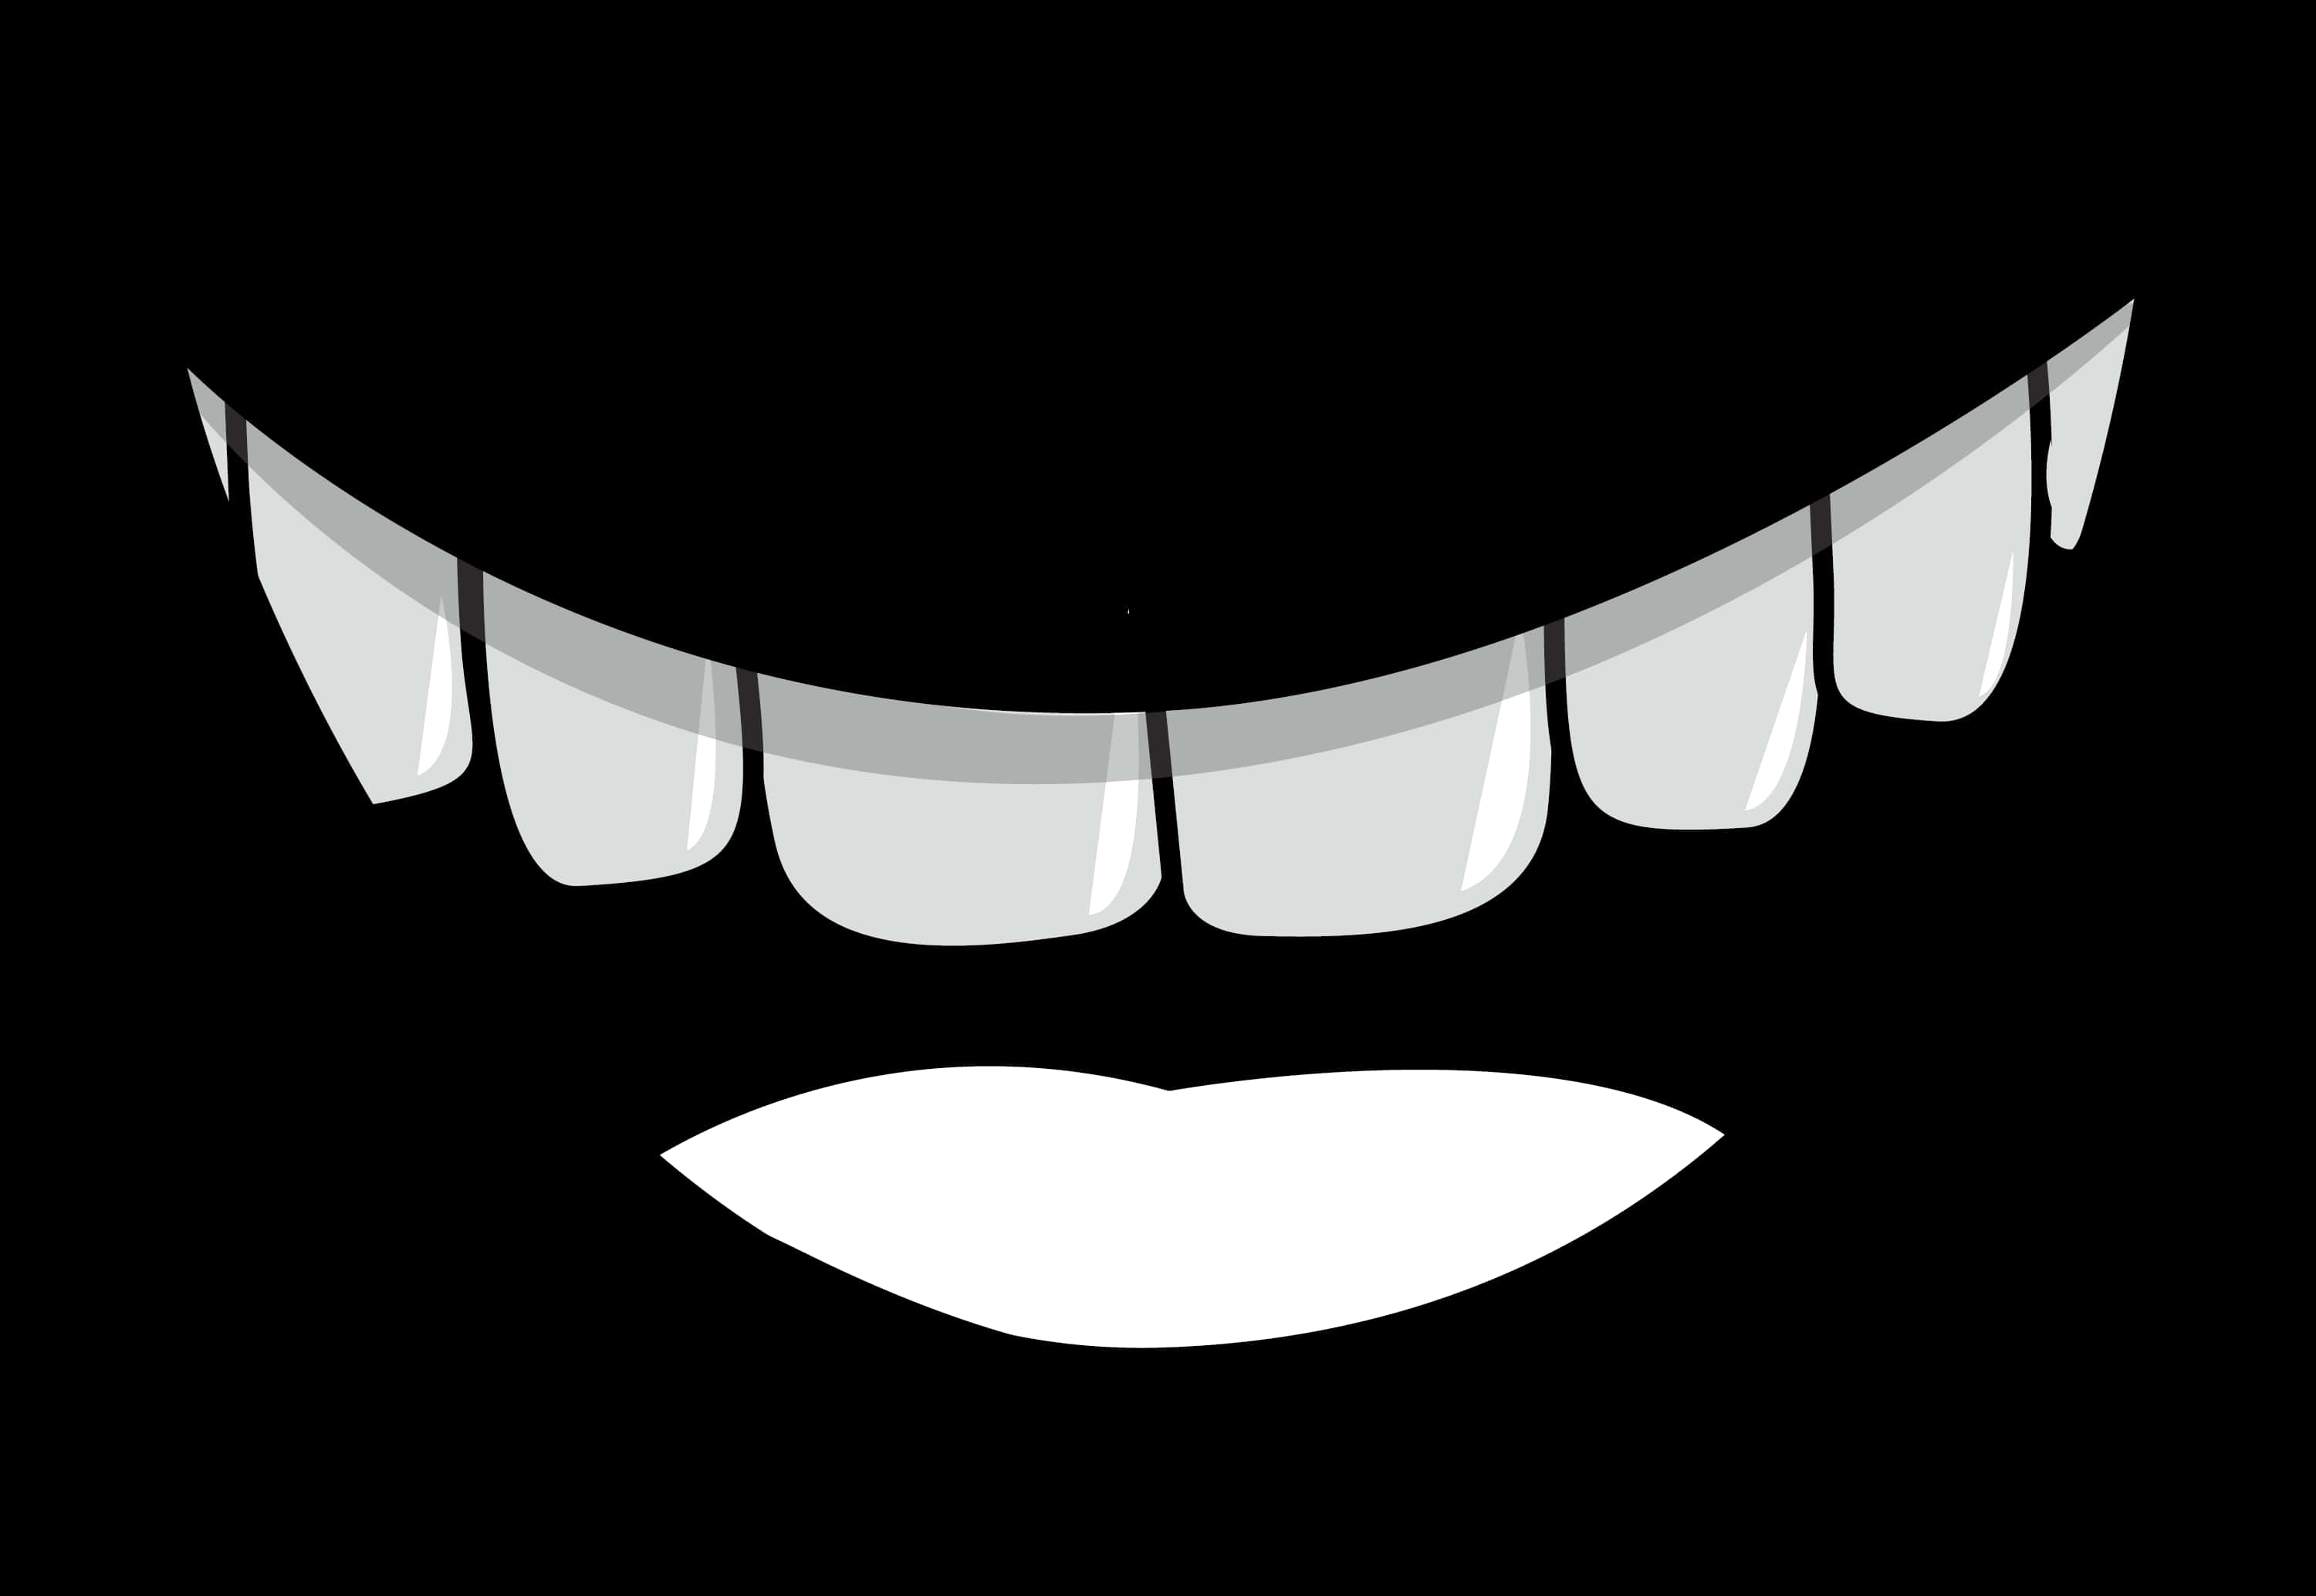 A Cartoon Mouth And Teeth